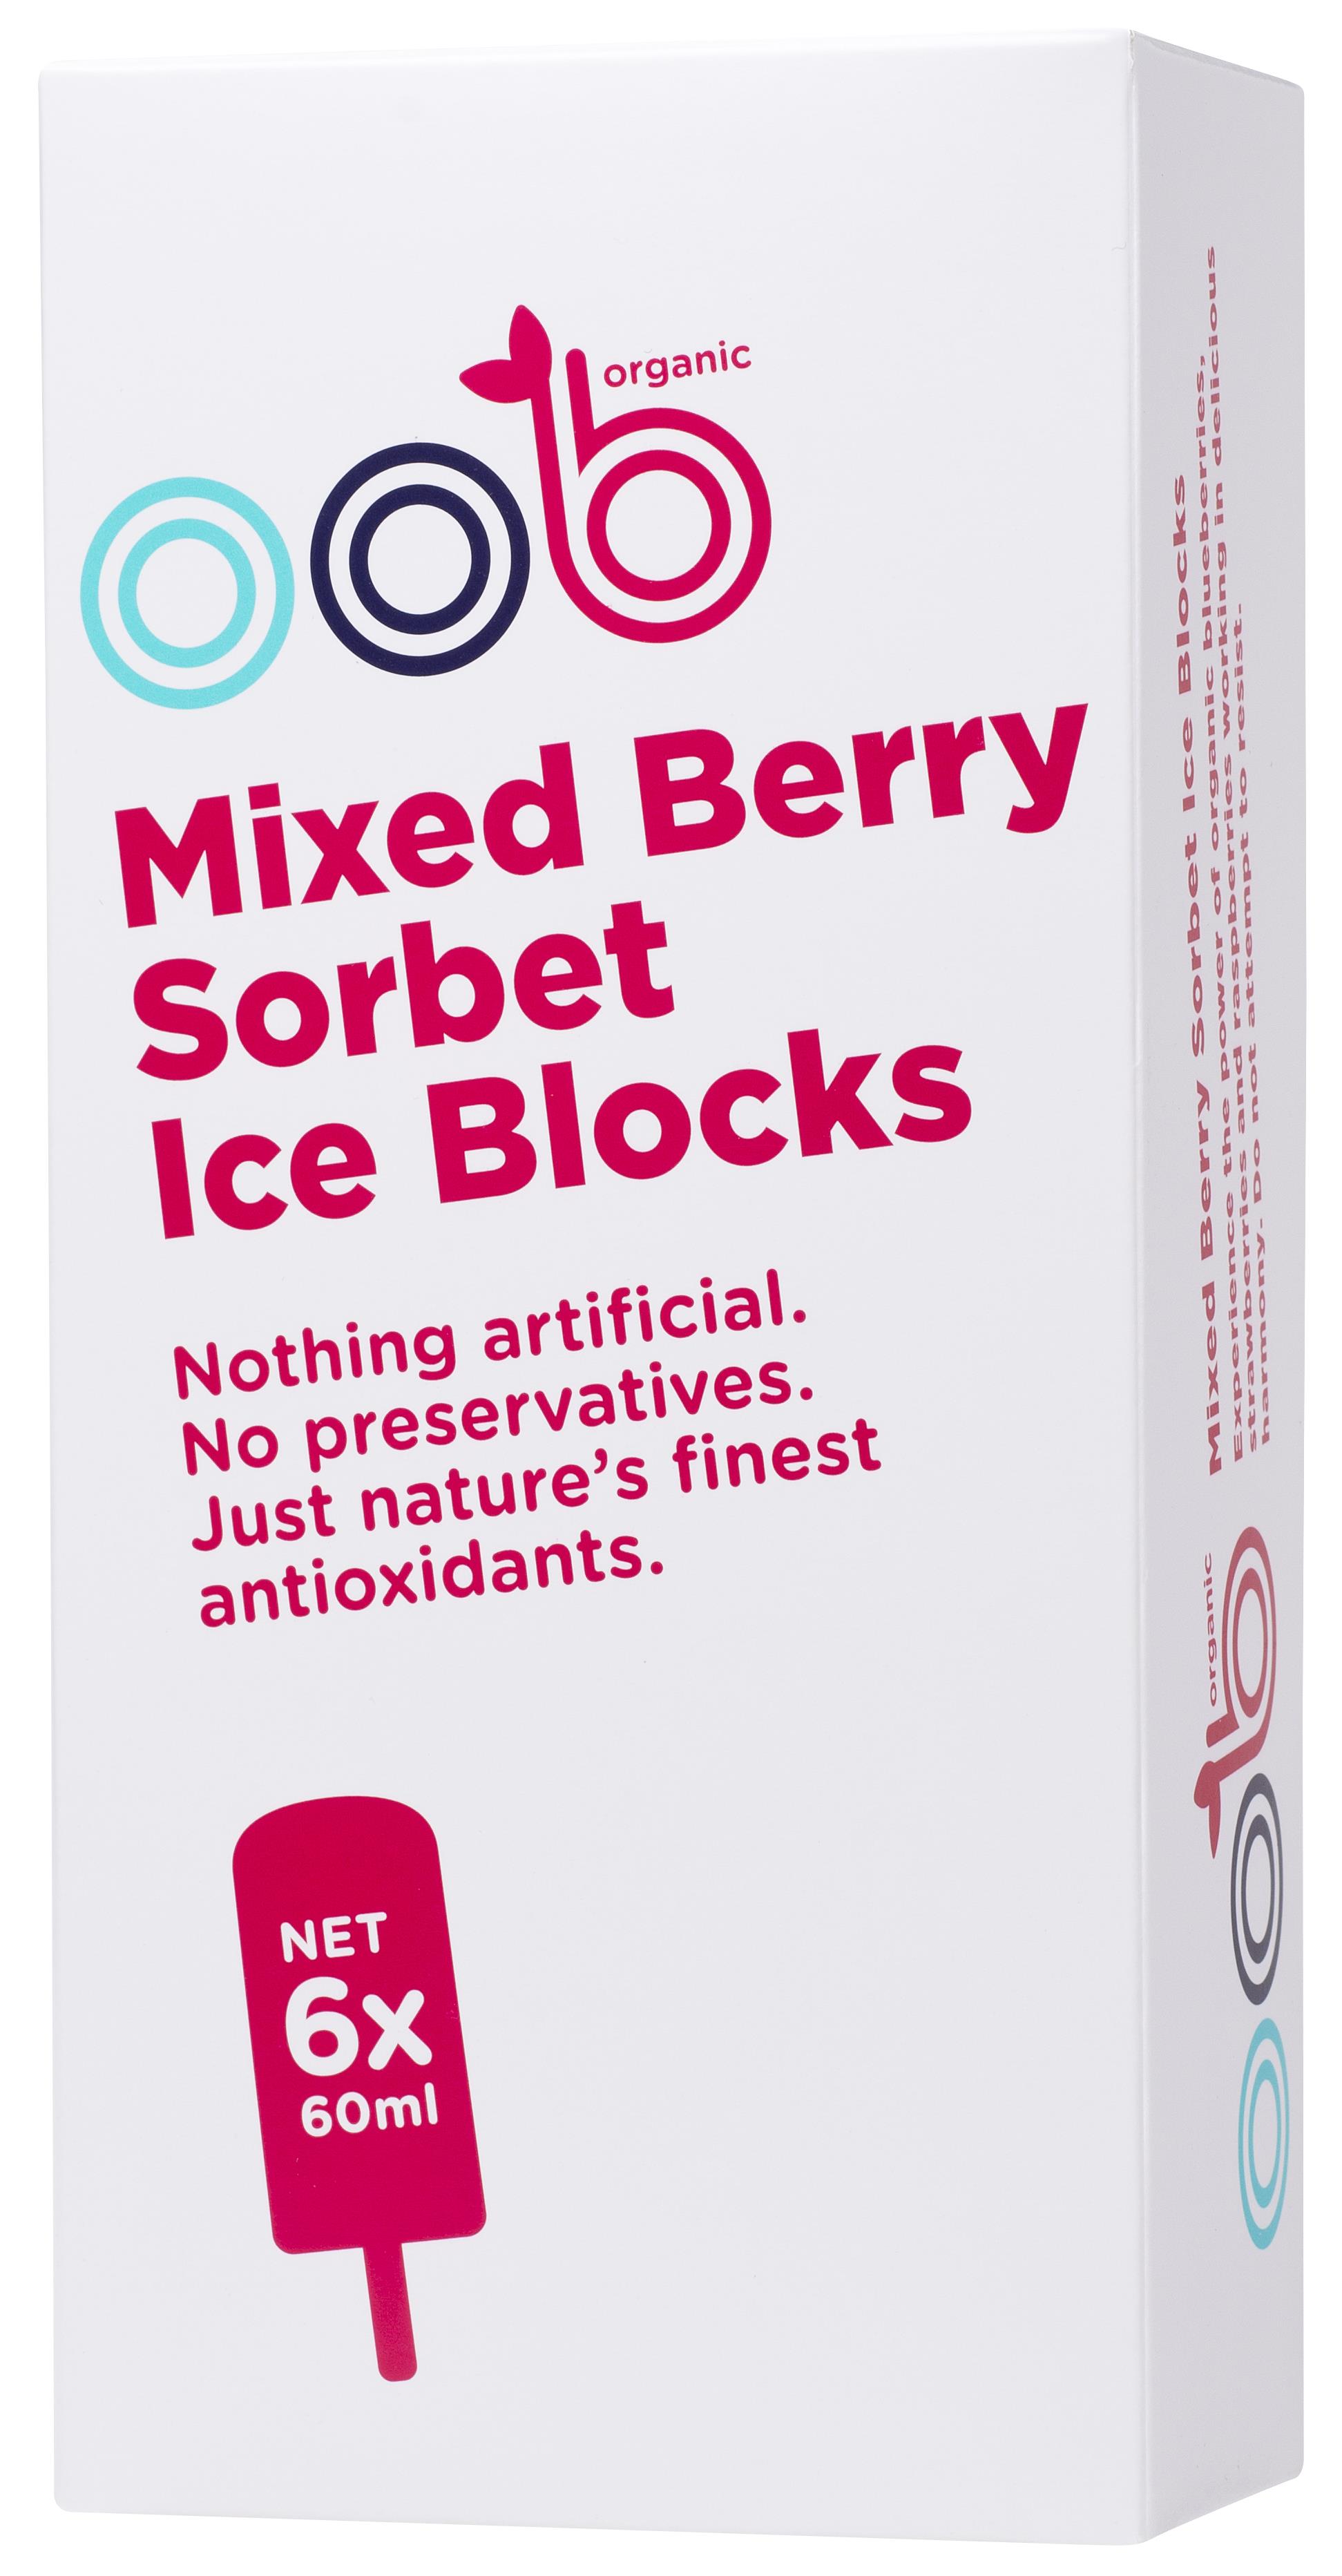 oob organic mixed berry ice blocks